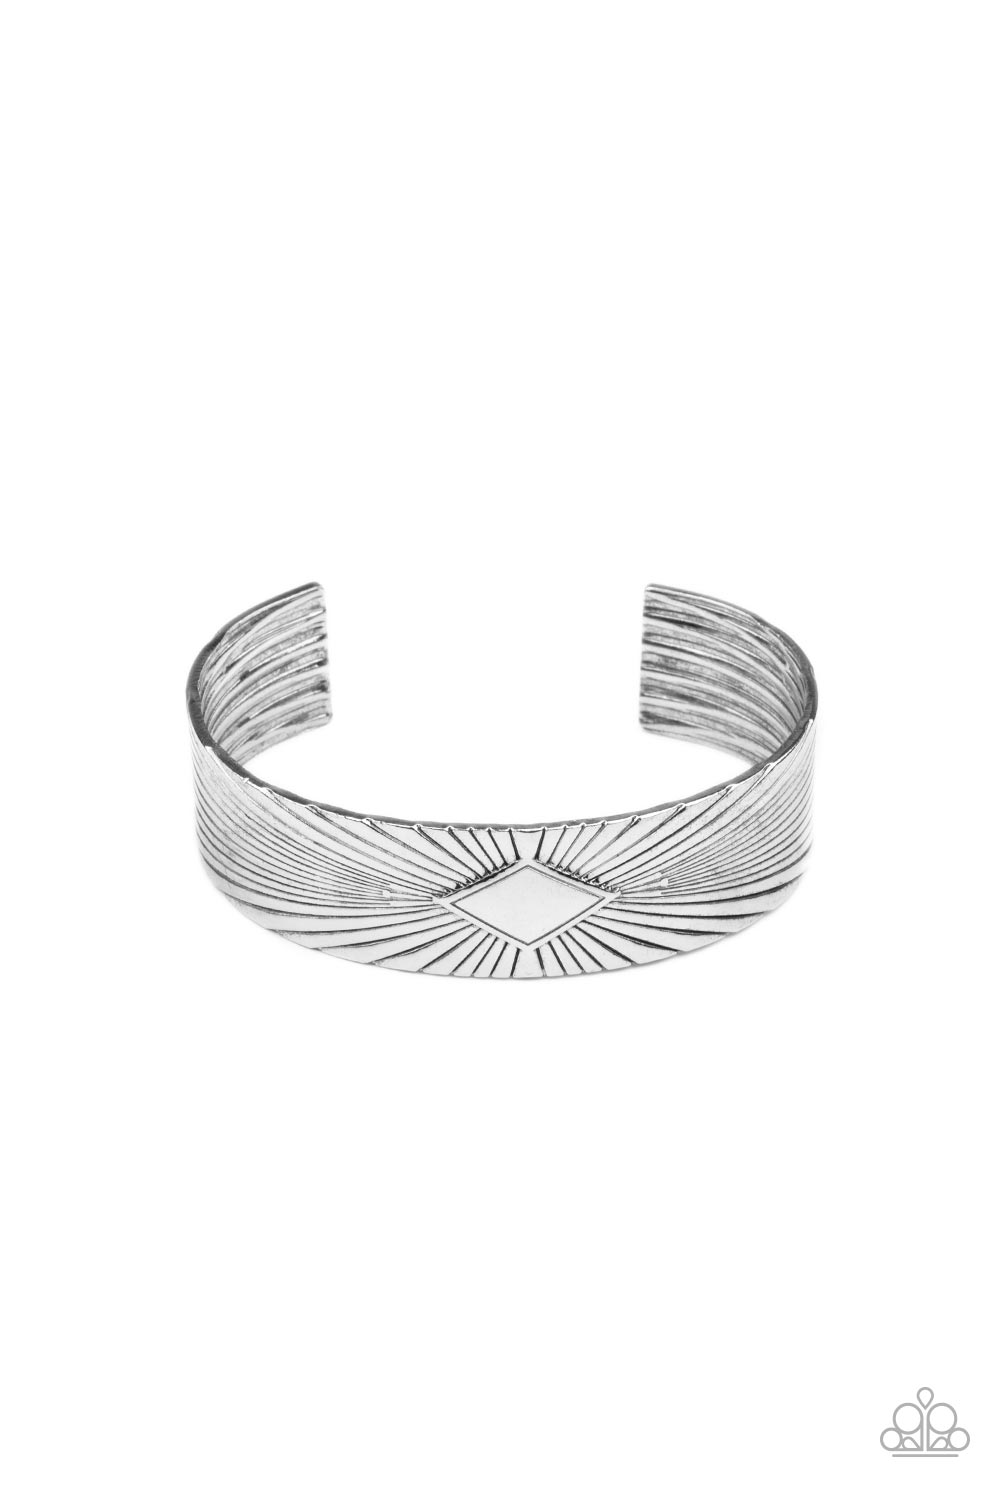 Magnate Mecca - silver - Paparazzi MENS bracelet – JewelryBlingThing